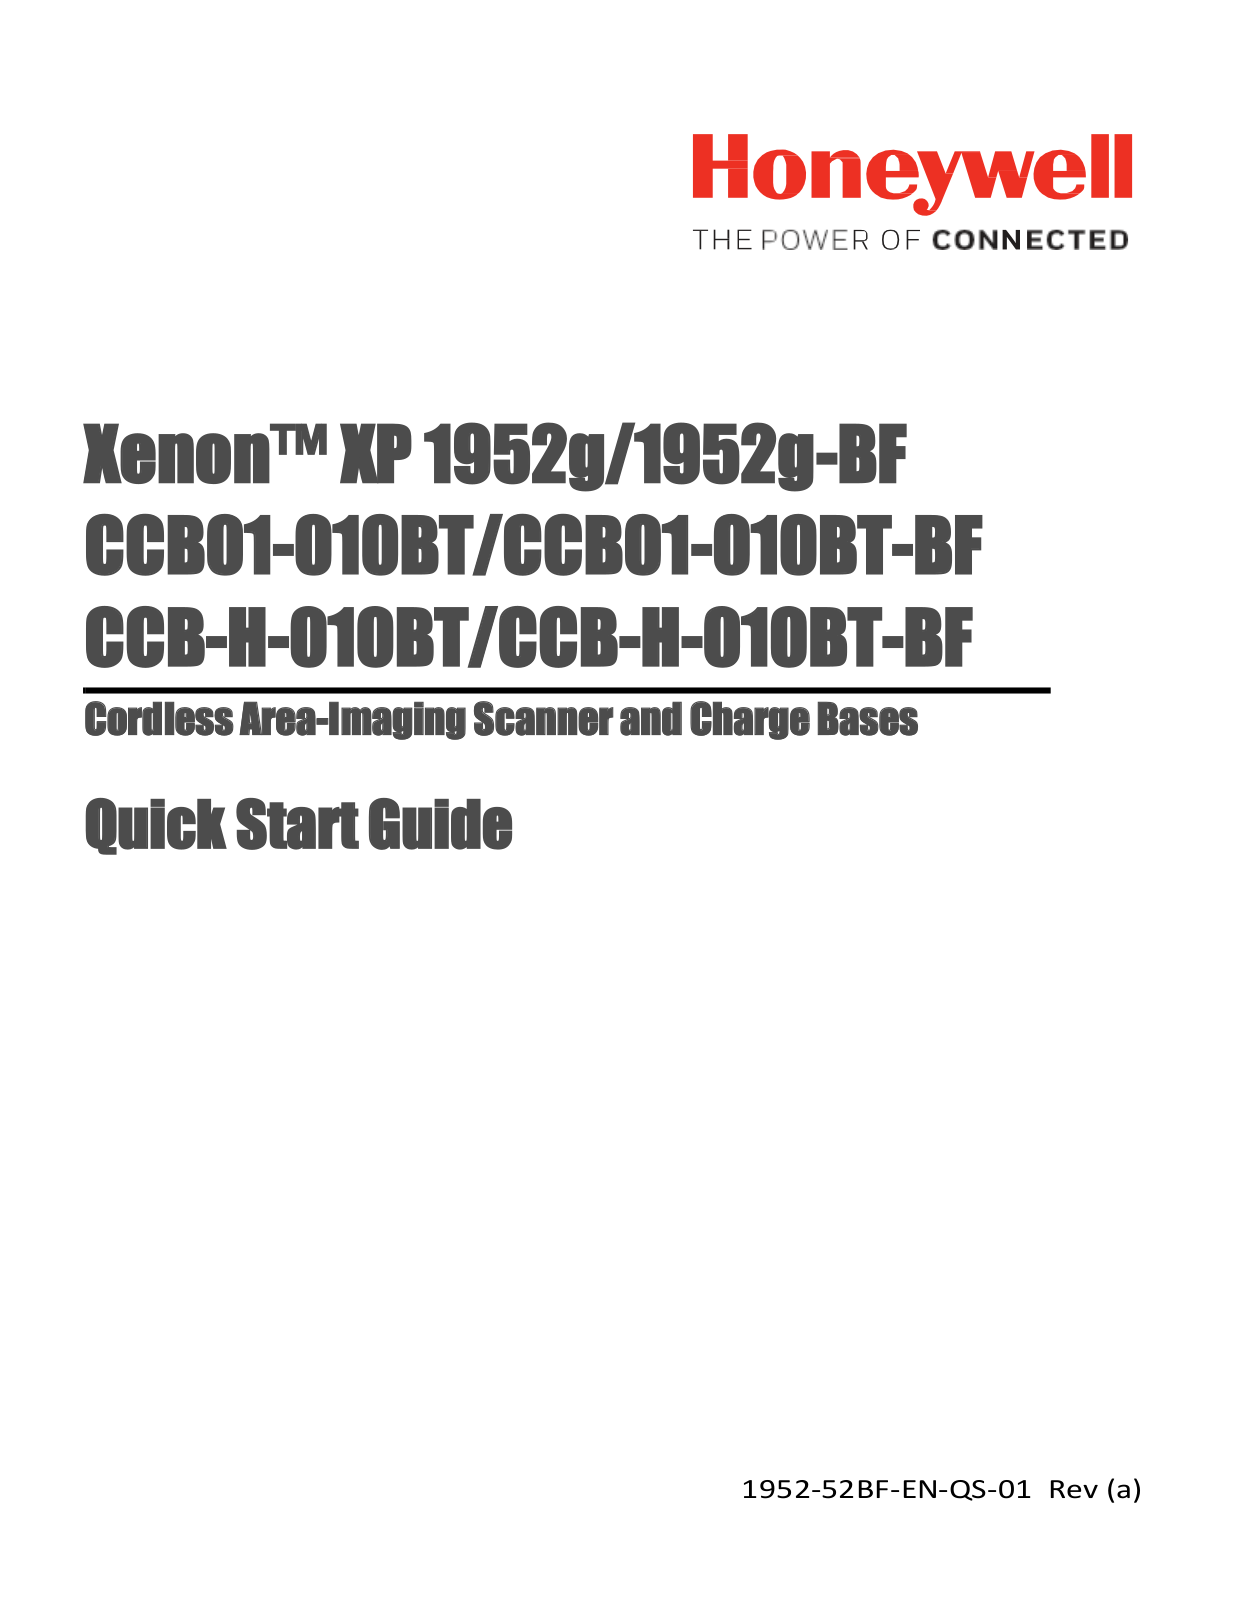 Honeywell CCBHBF01A, CCBH01A Users Manual